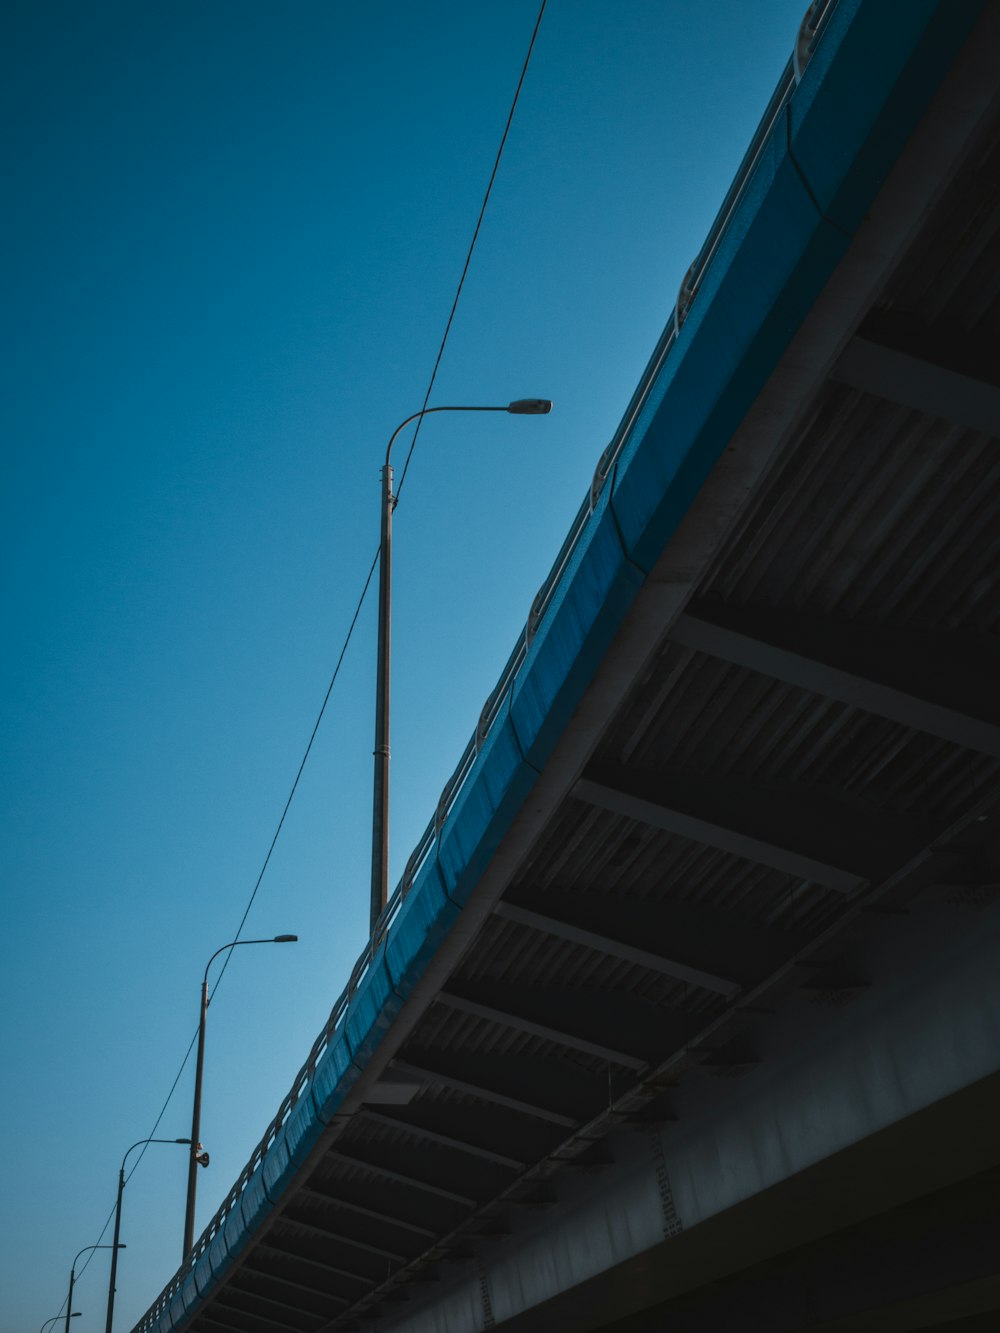 a street light on a pole next to a bridge